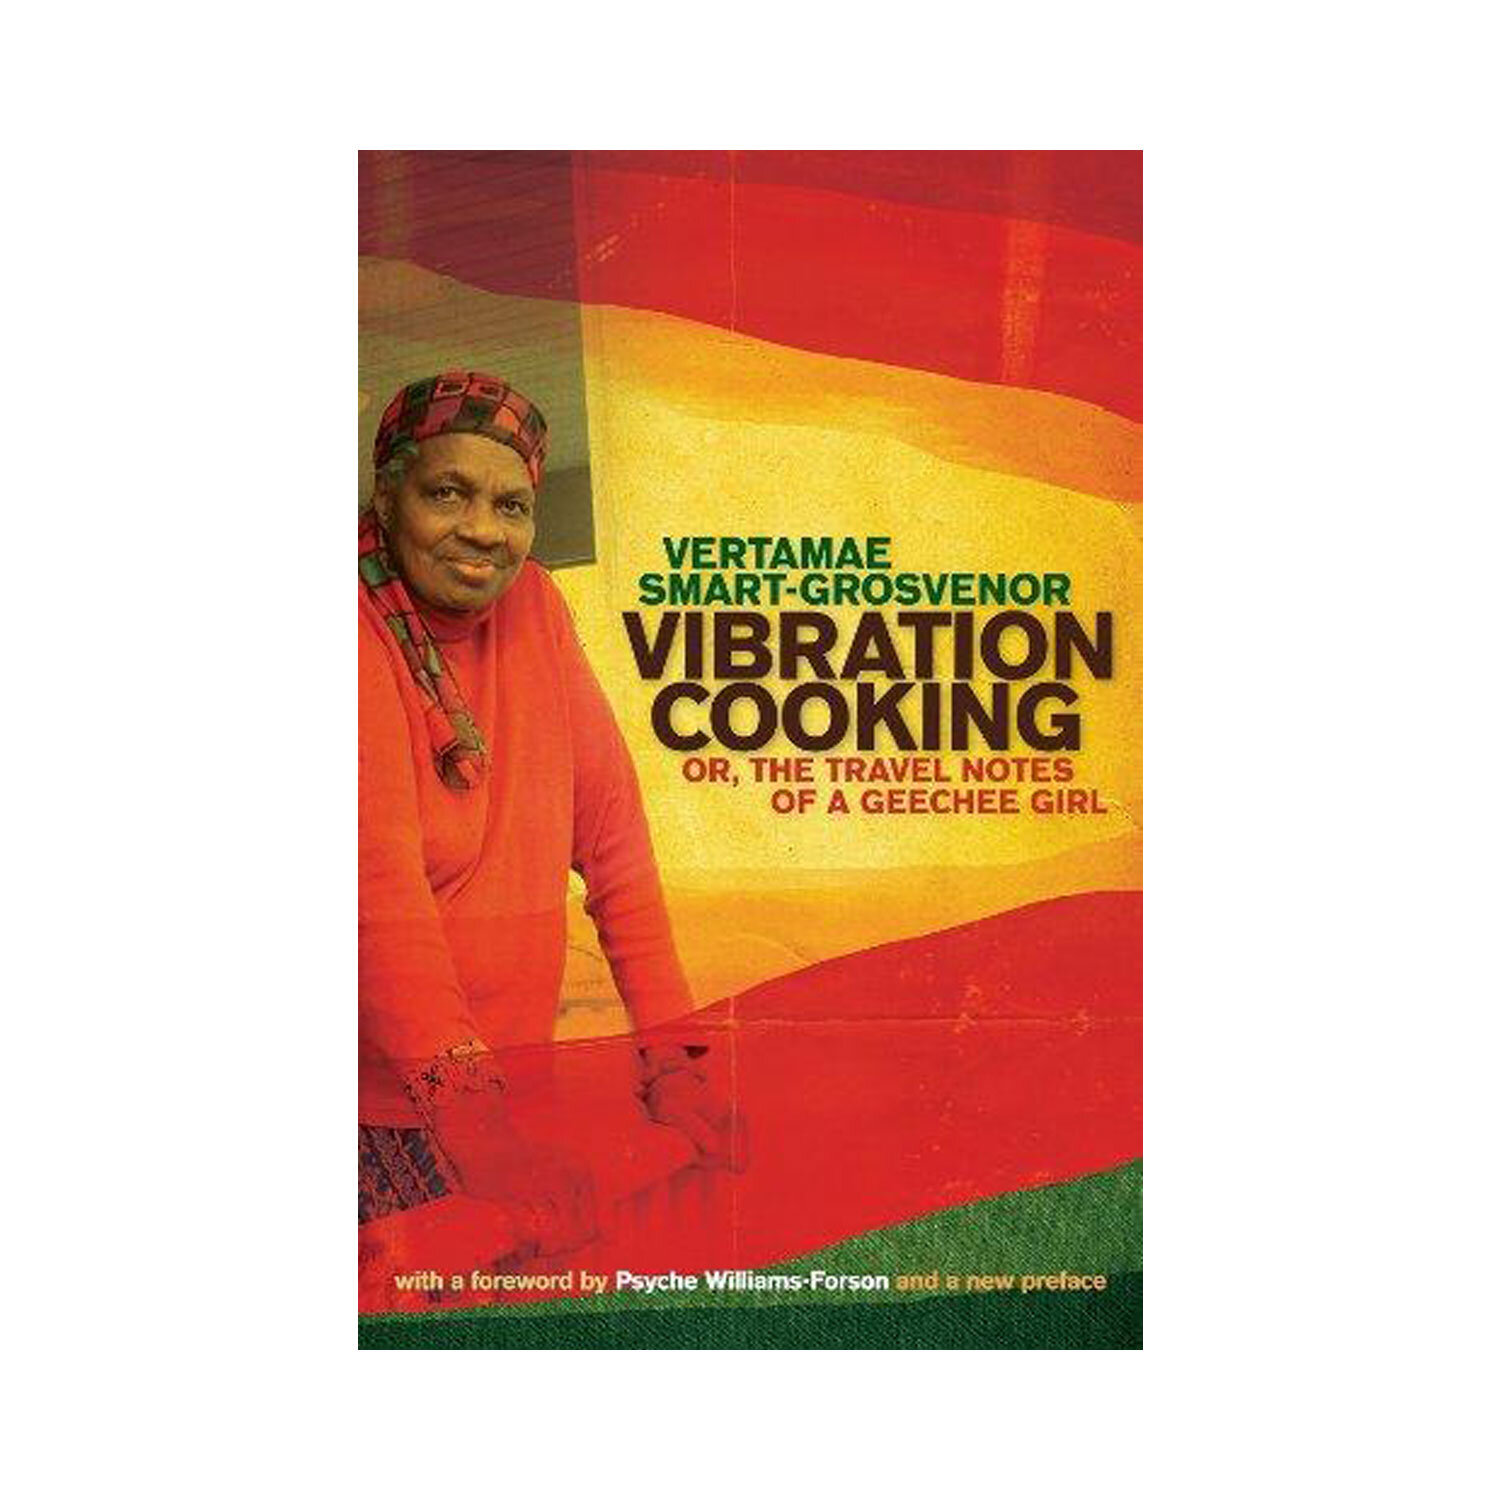 Vibration Cooking by Vertamae Smart Grosvenor